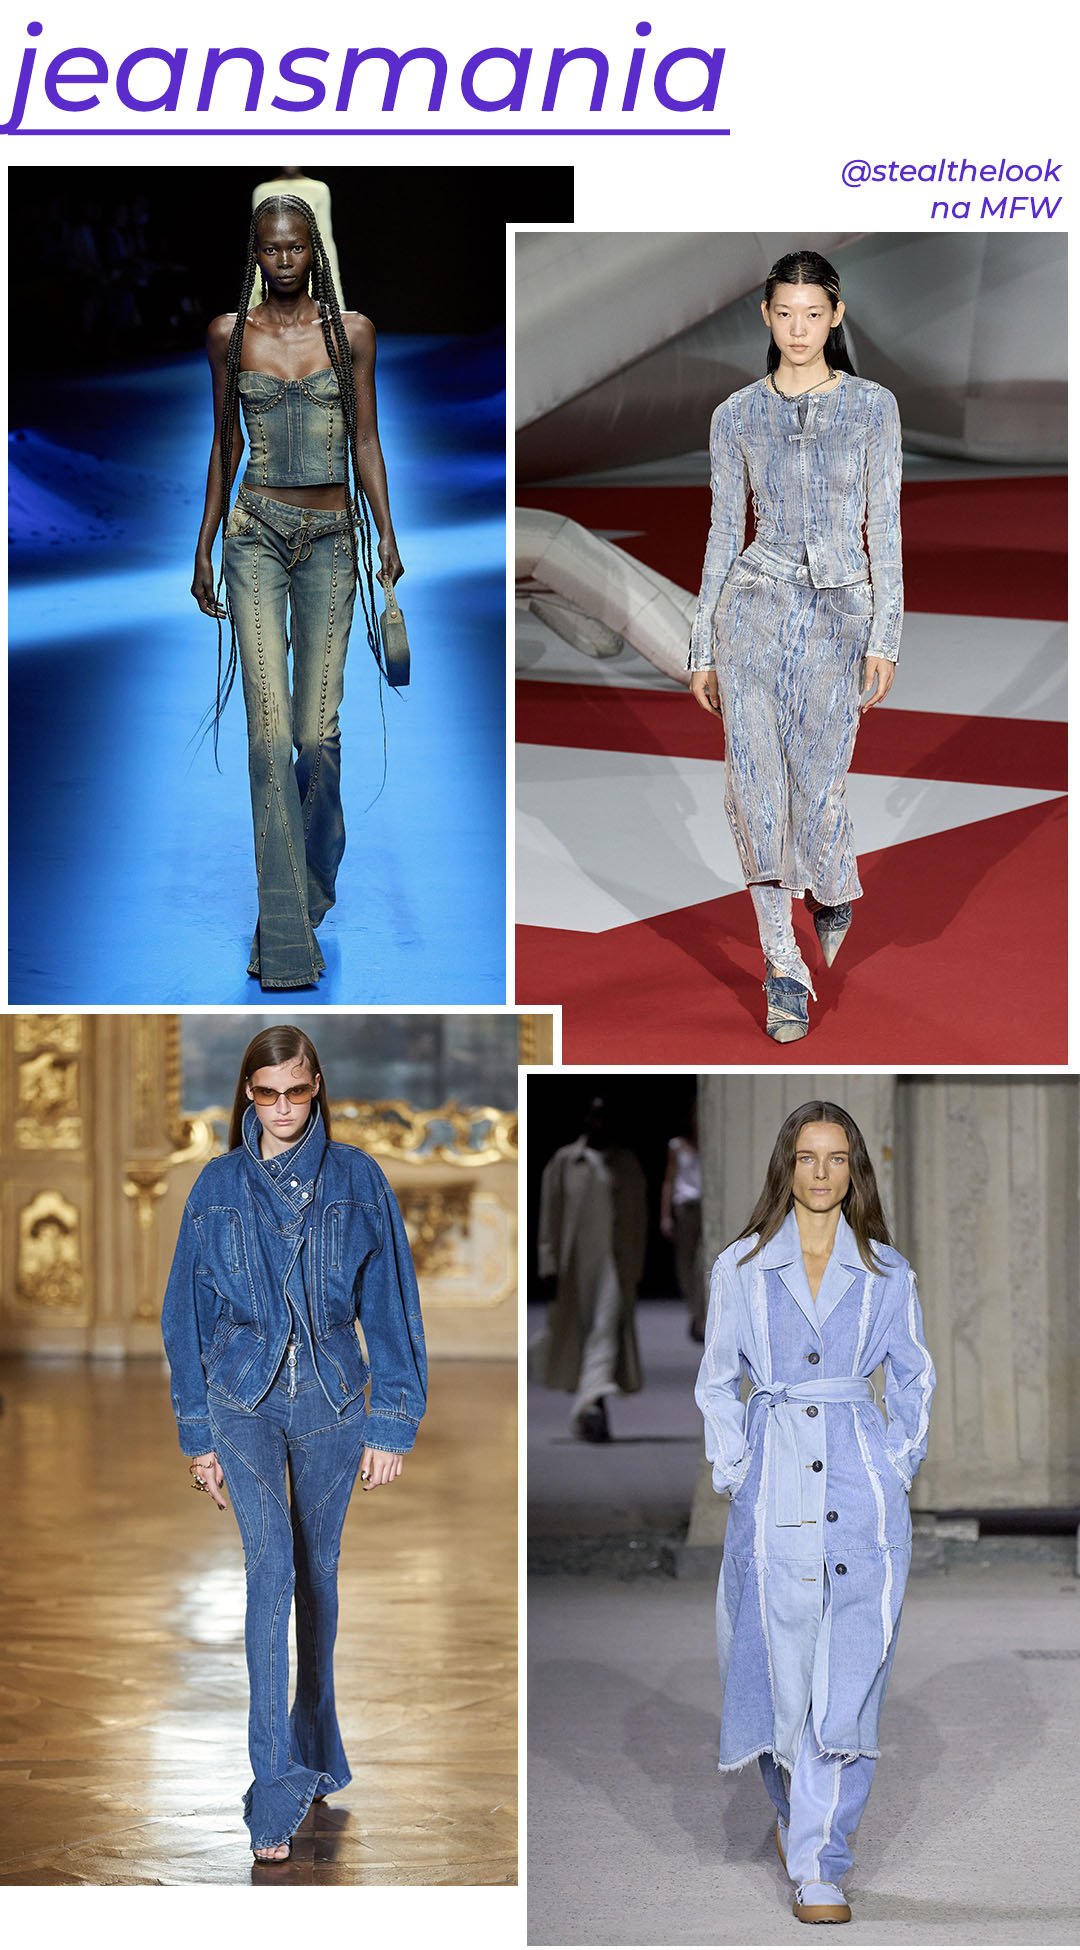 Blumarine, Diesel, Ermanno Scervino e Trussardi - roupas diversas jeans - Milano Fashion Week - Primavera - modelo andando pela passarela - https://stealthelook.com.br